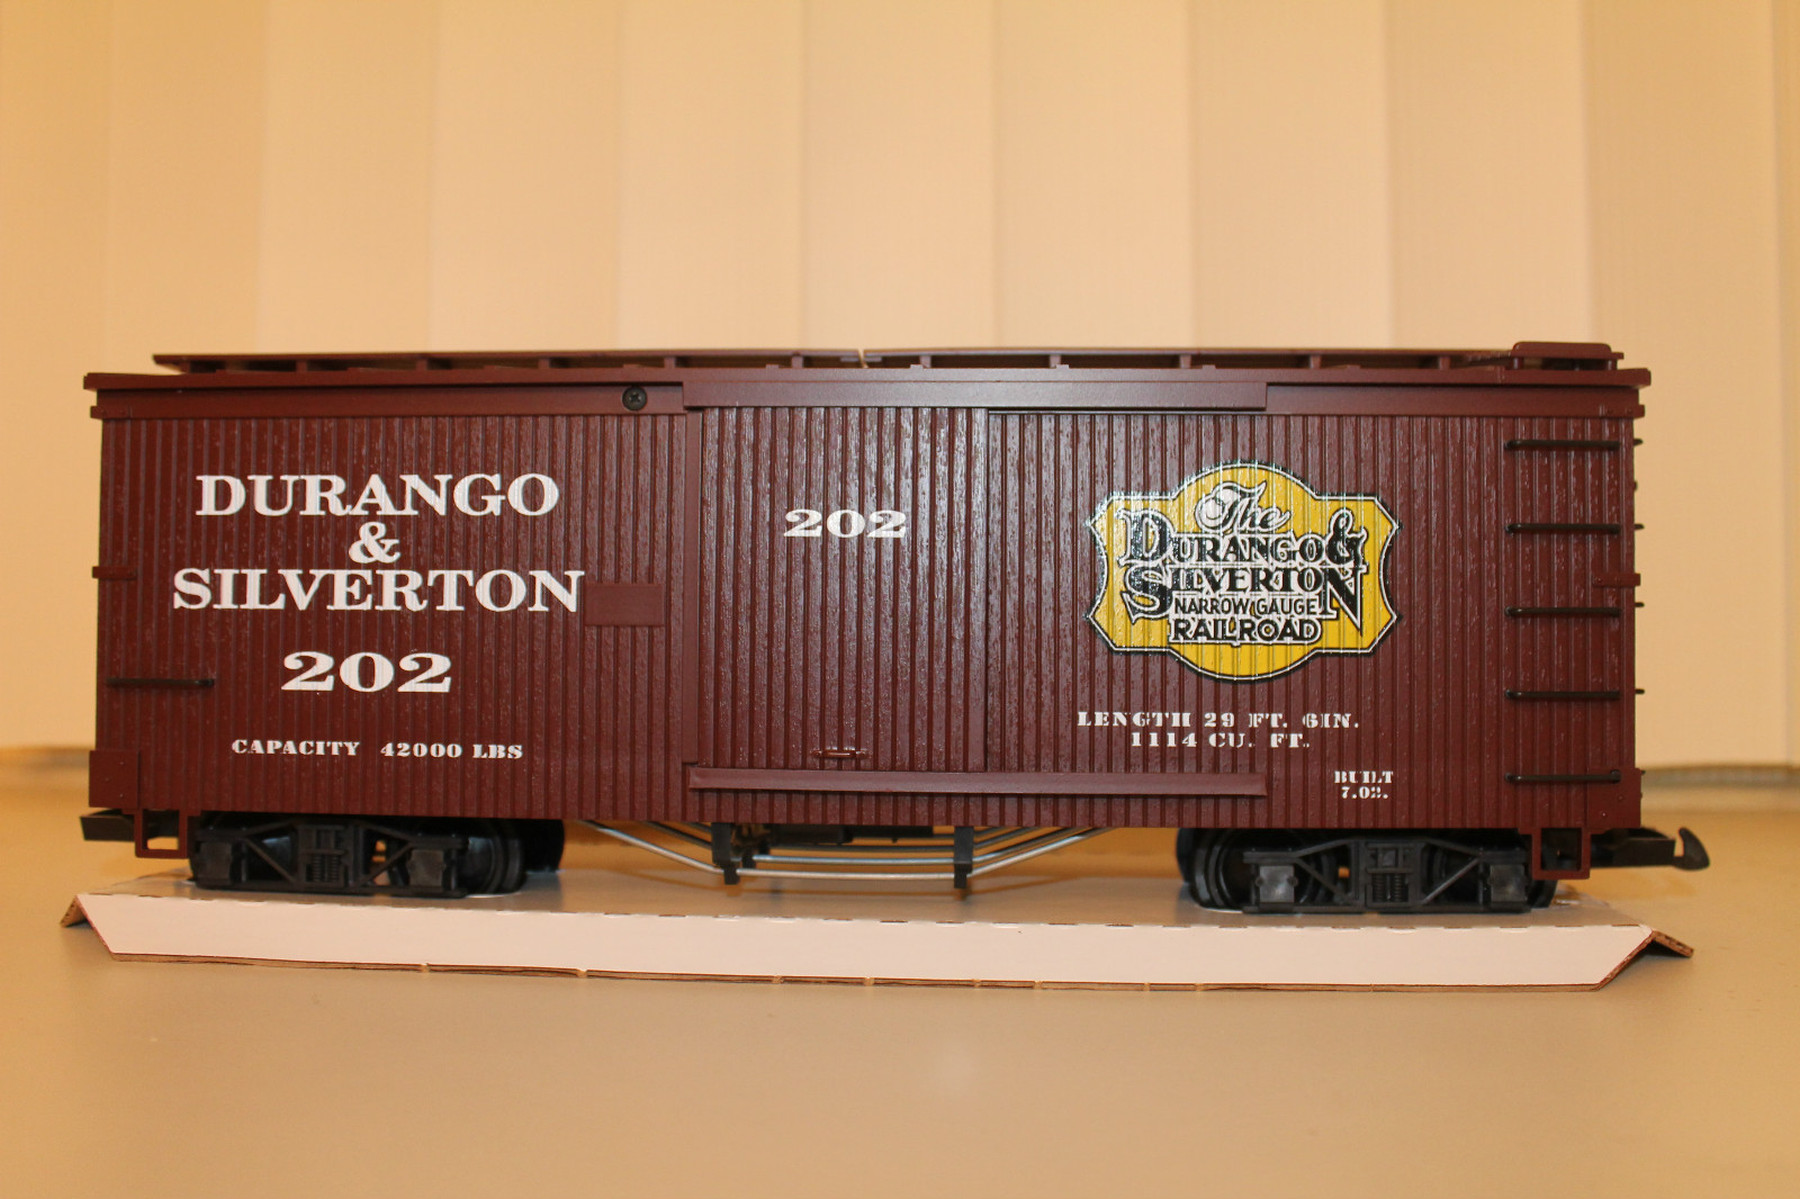 r19025 Durango & Silverton #202